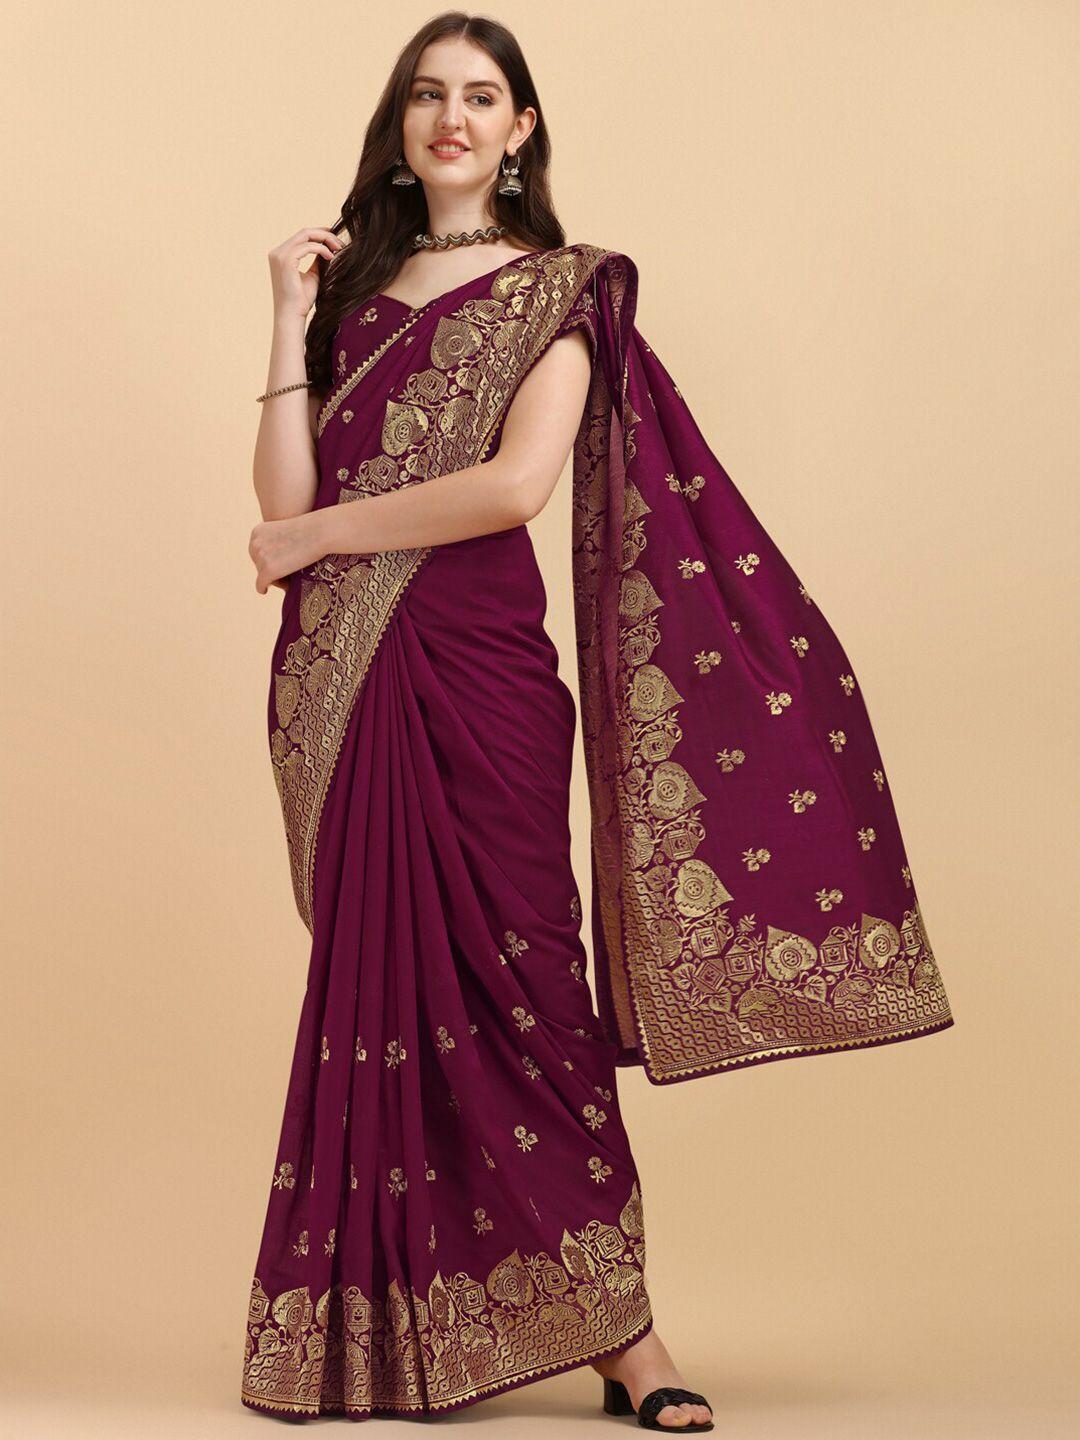 mitera purple & gold-toned ethnic motifs embroidered art silk saree